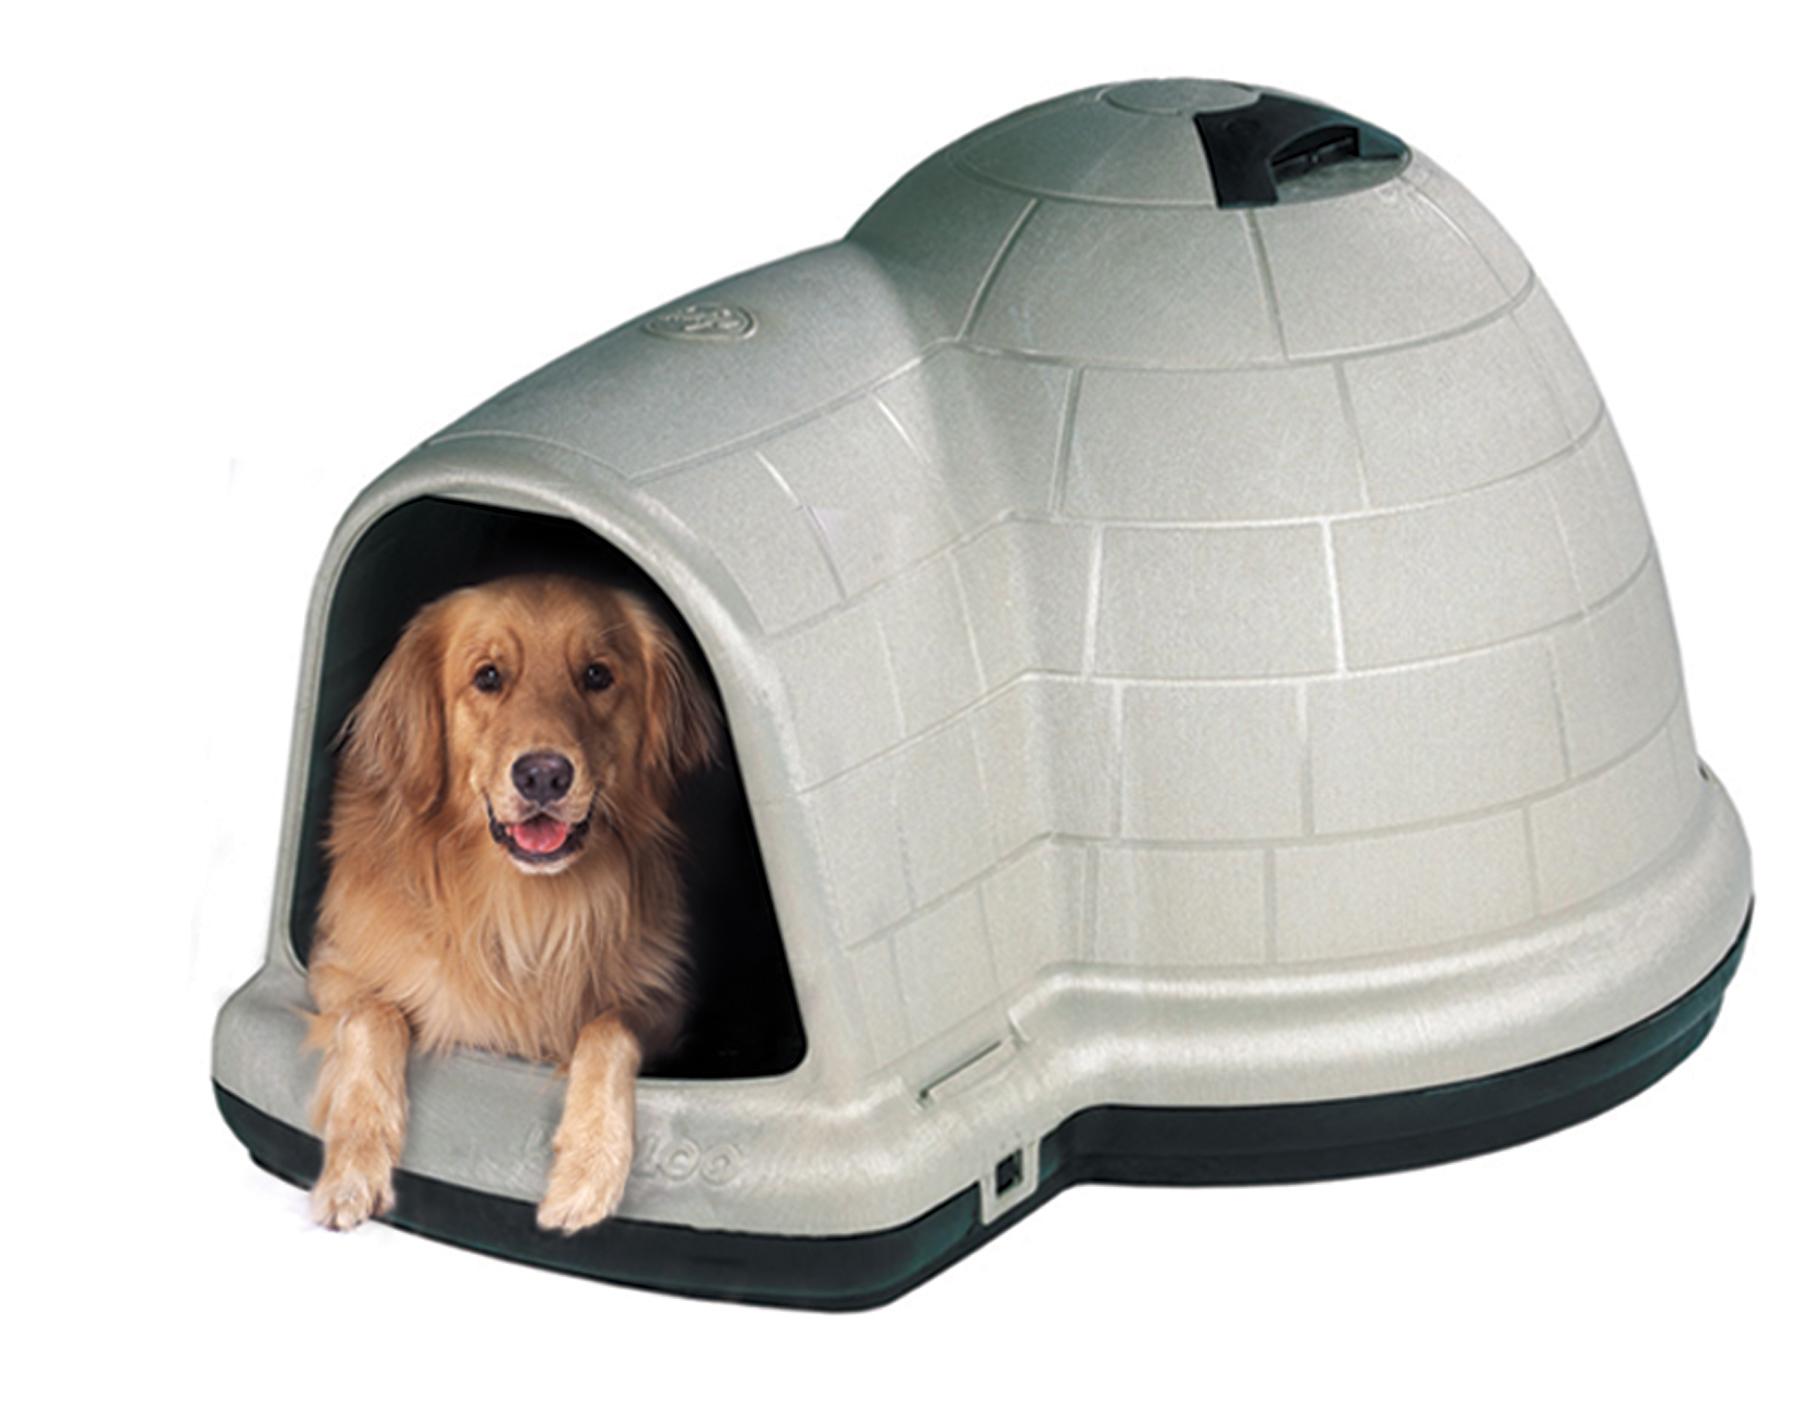 igloo dog house accessories